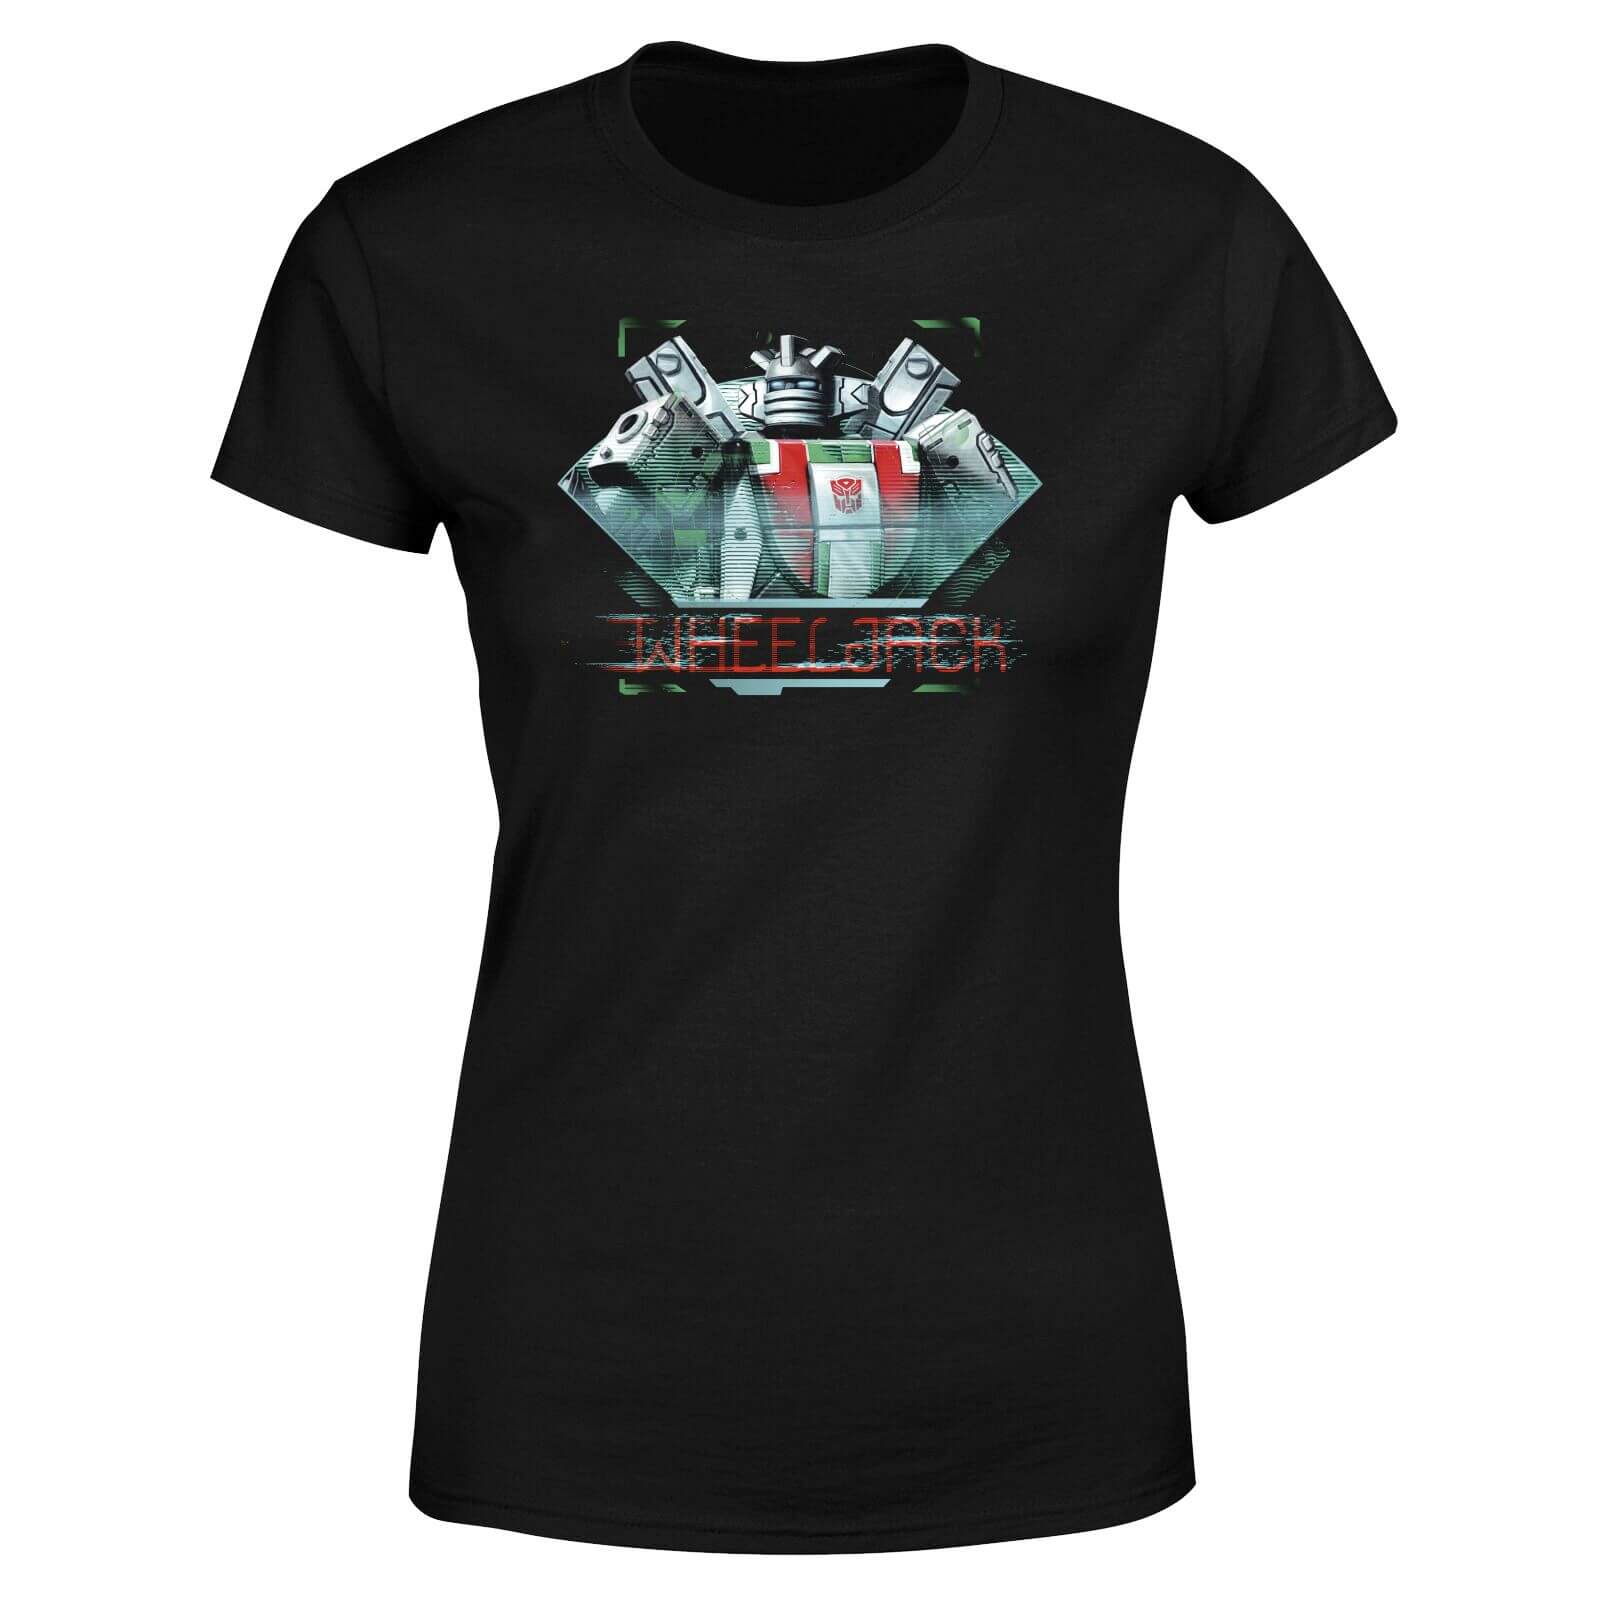 Transformers Wheeljack Glitch Women's T-Shirt - Black - S - Black